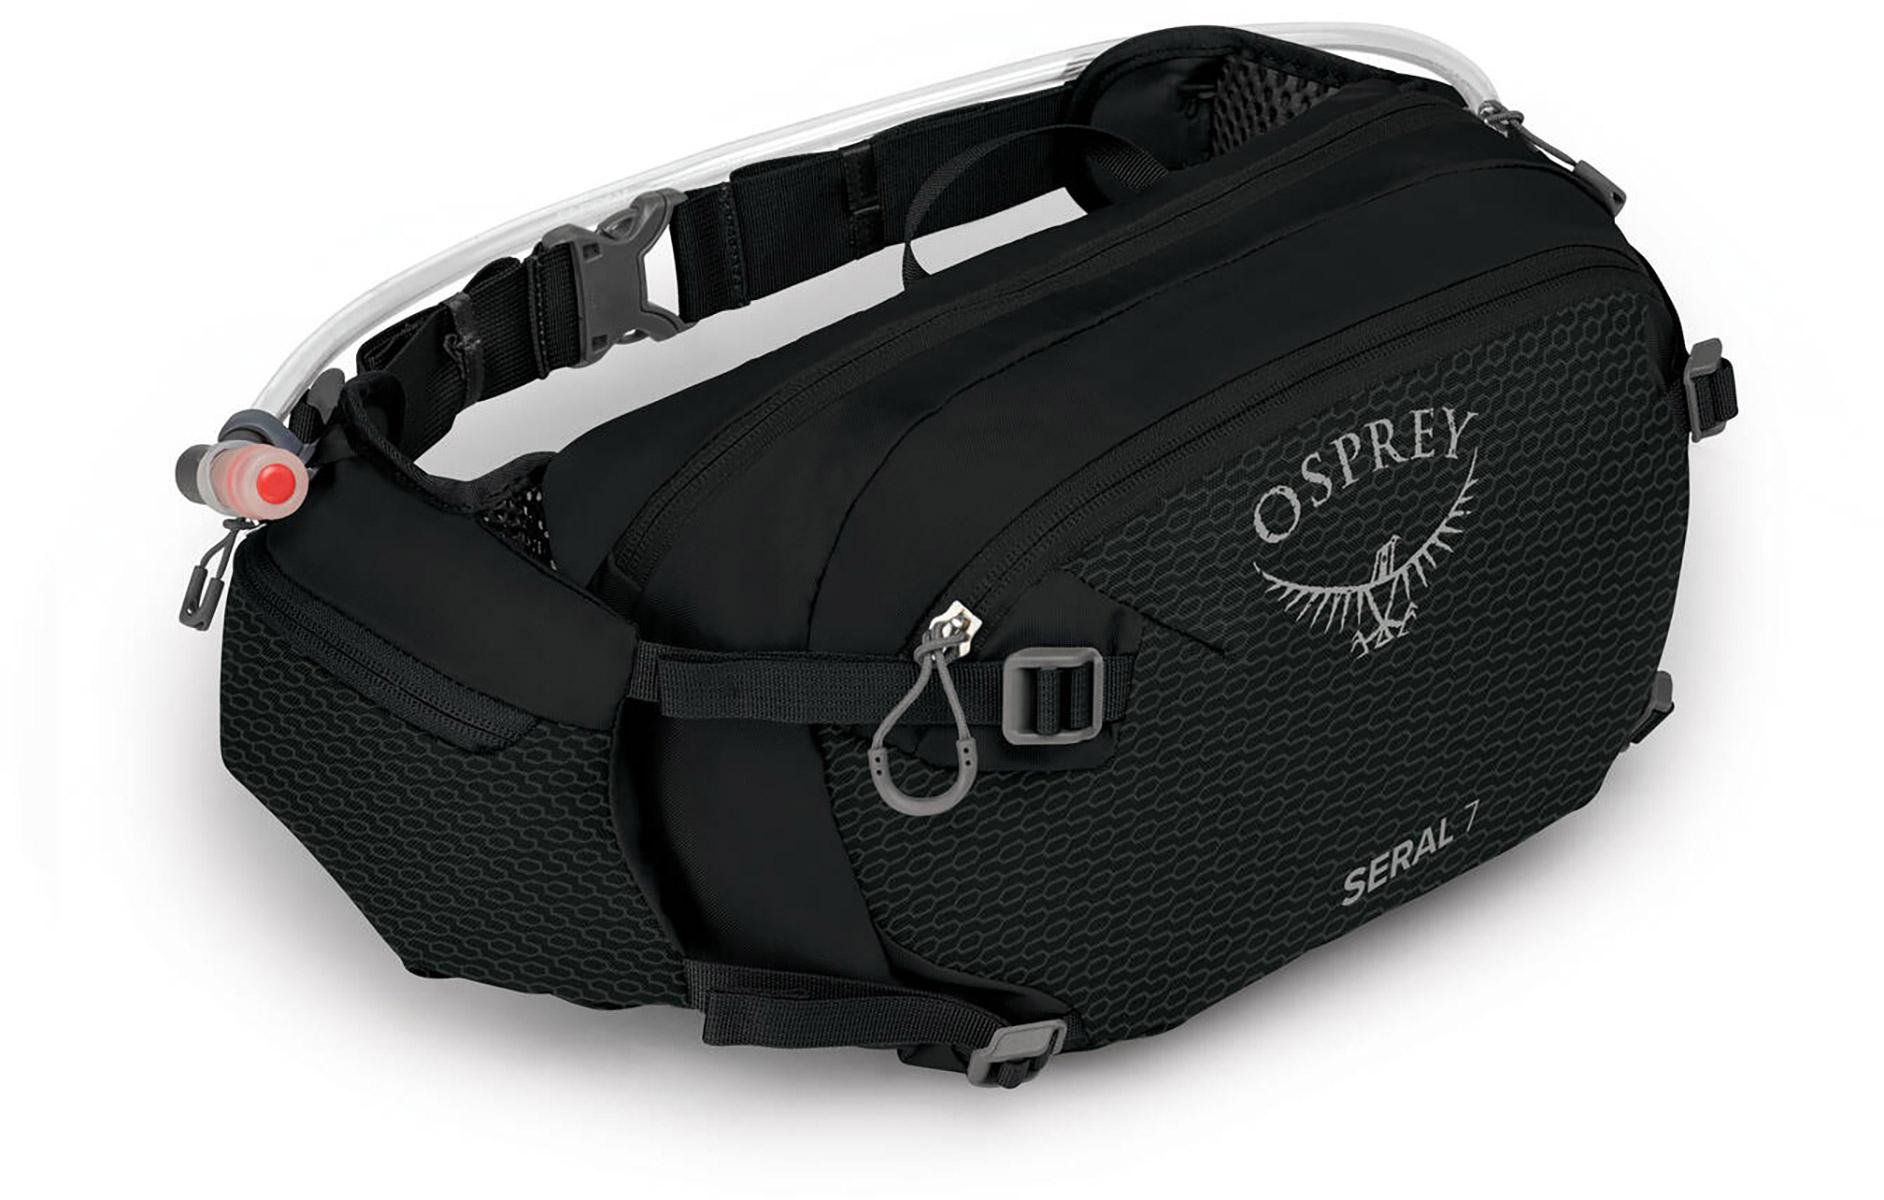 Osprey Seral 7 Hydration Waist Pack - Black